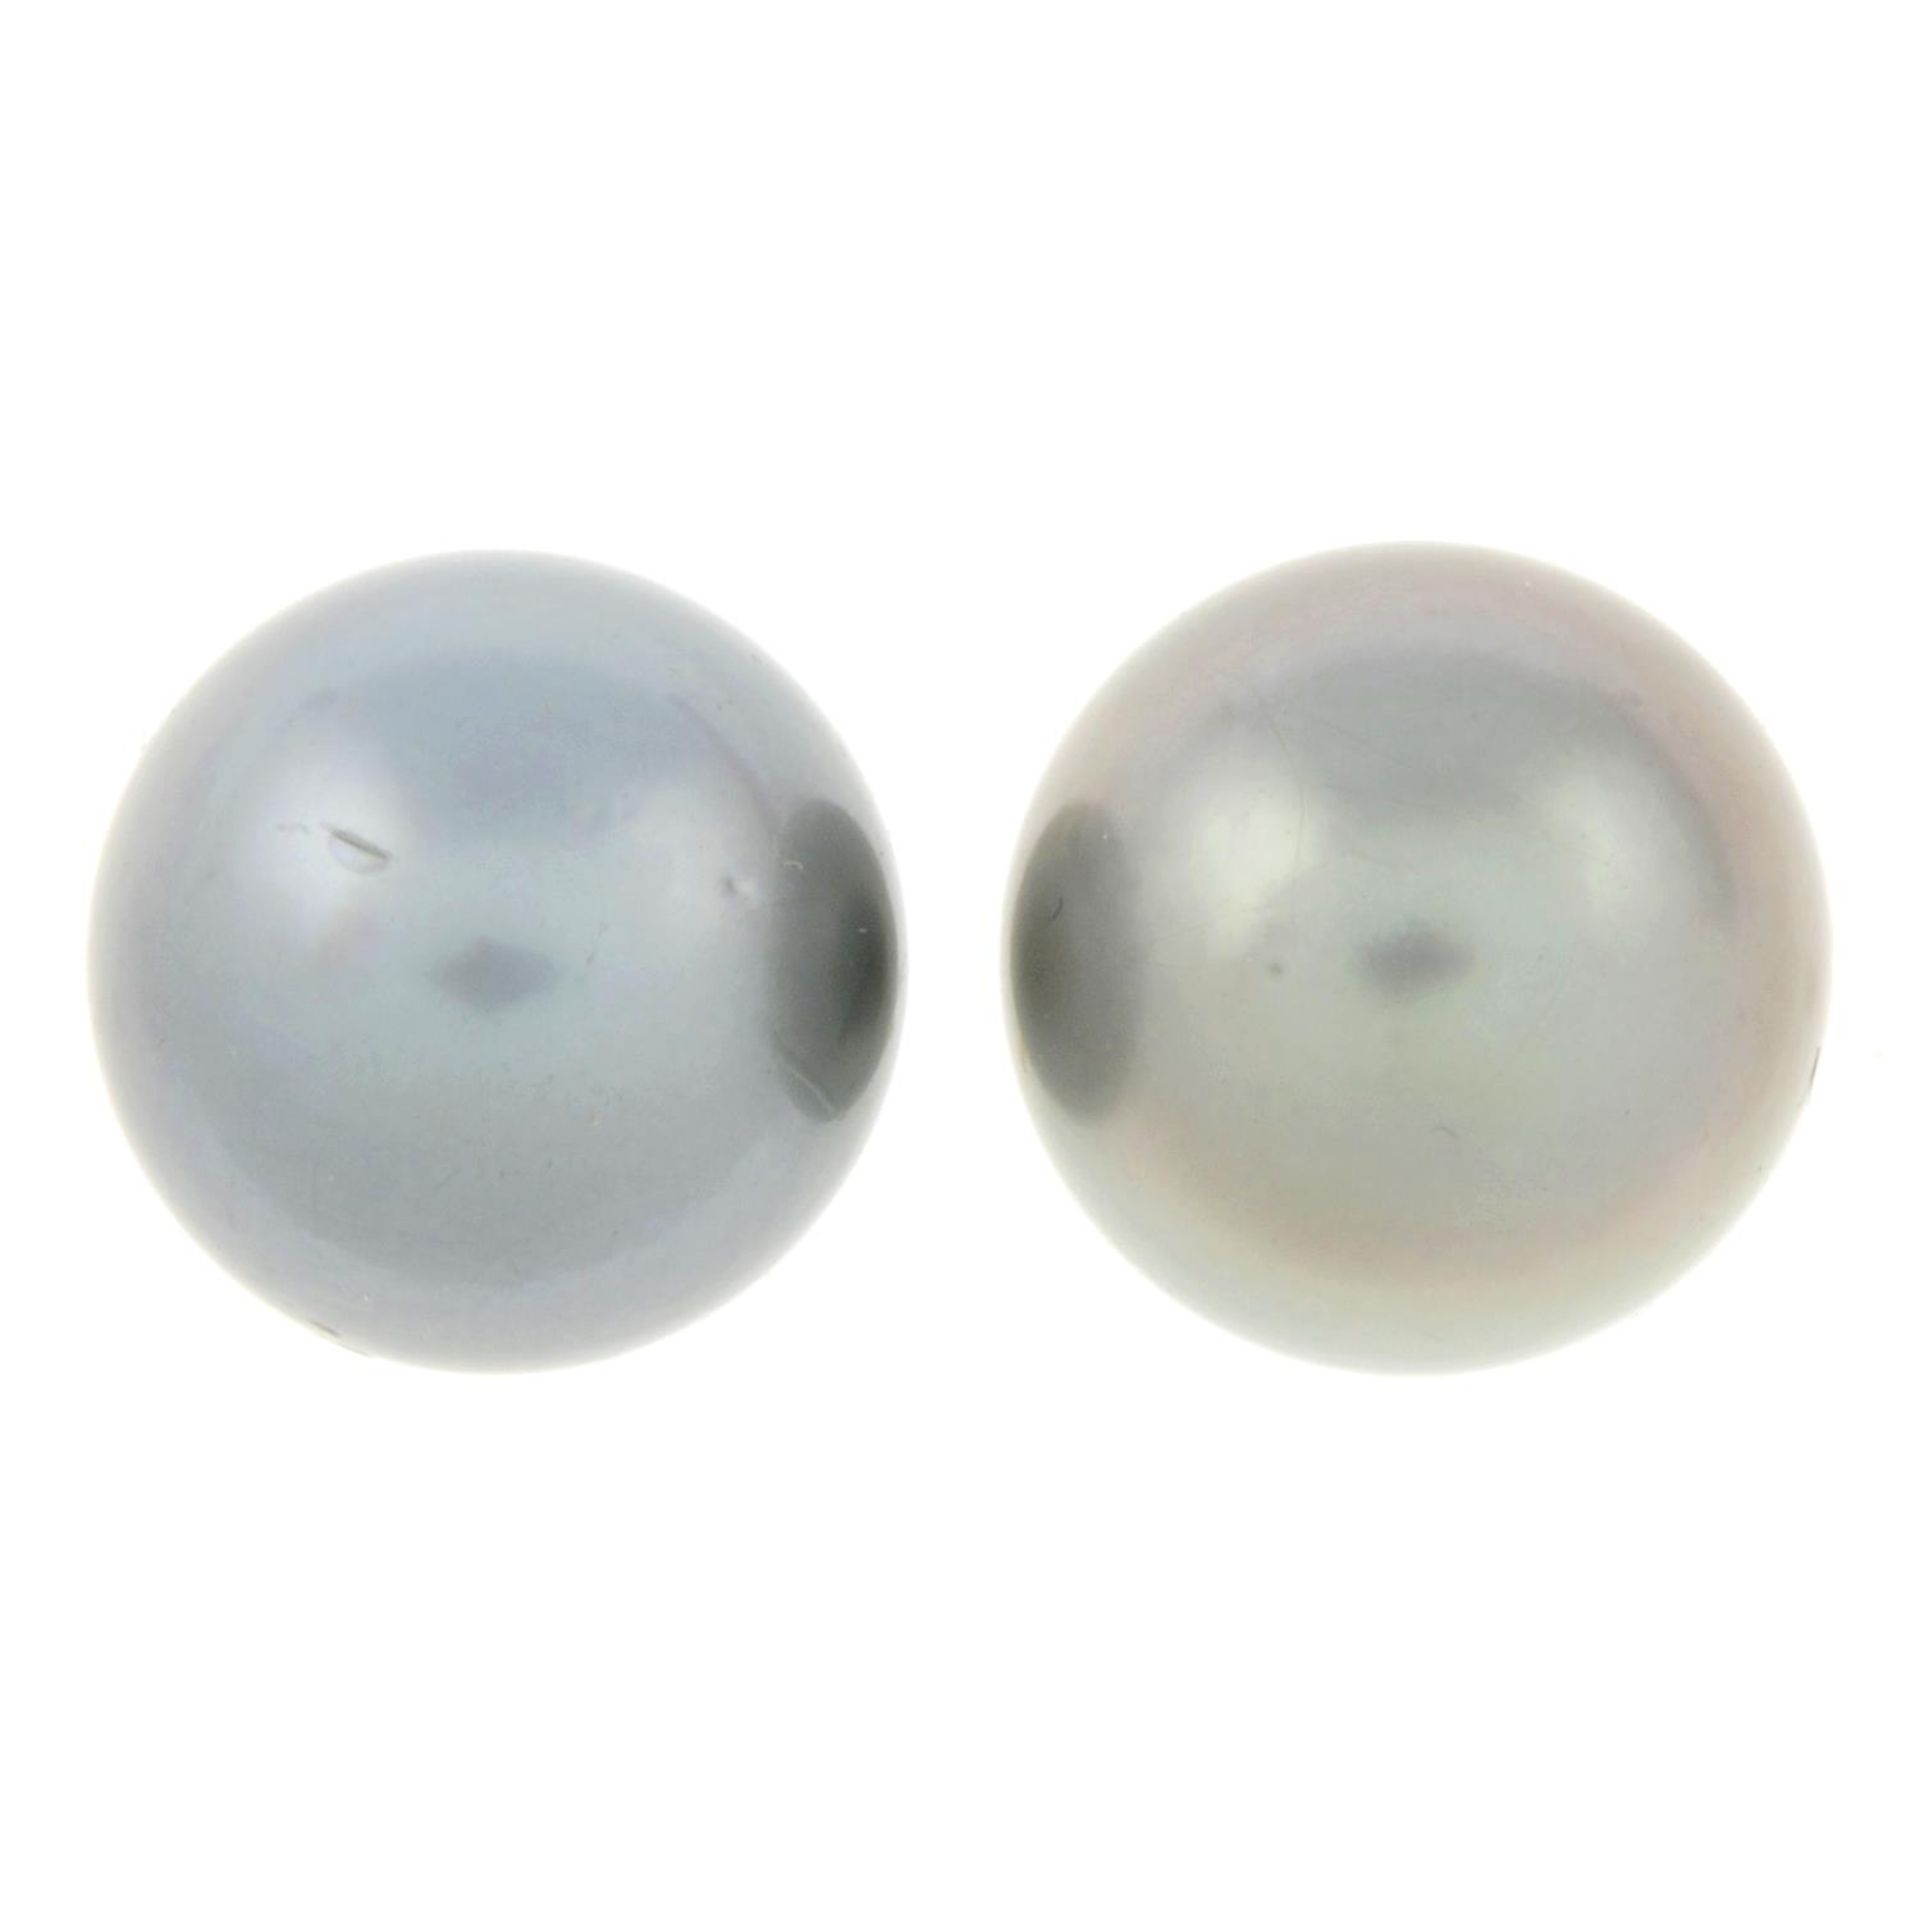 A pair of tahitian cultured pearl stud earrings.